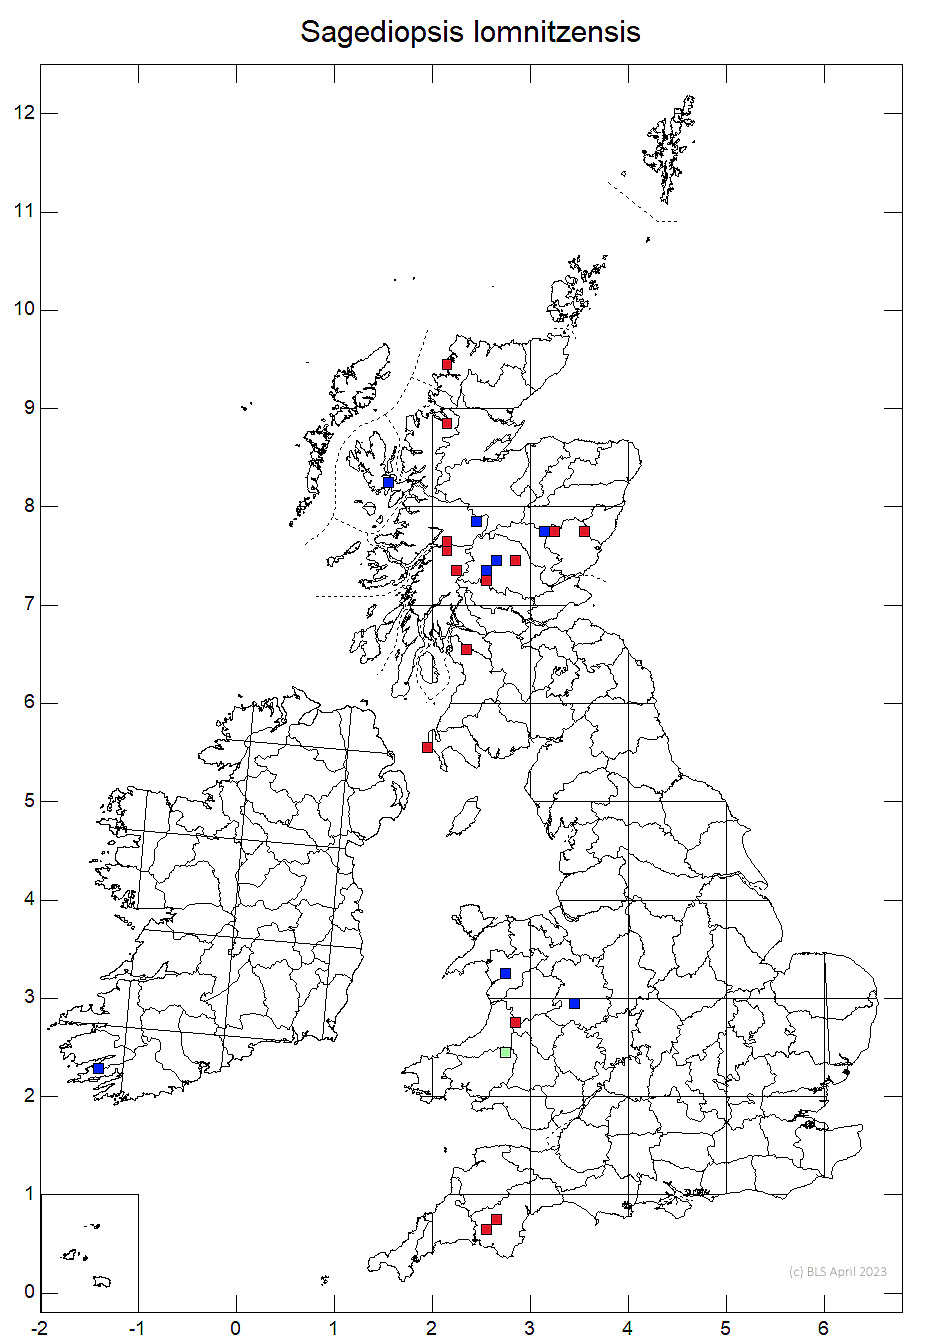 Sagediopsis lomnitzensis 10km sq distribution map